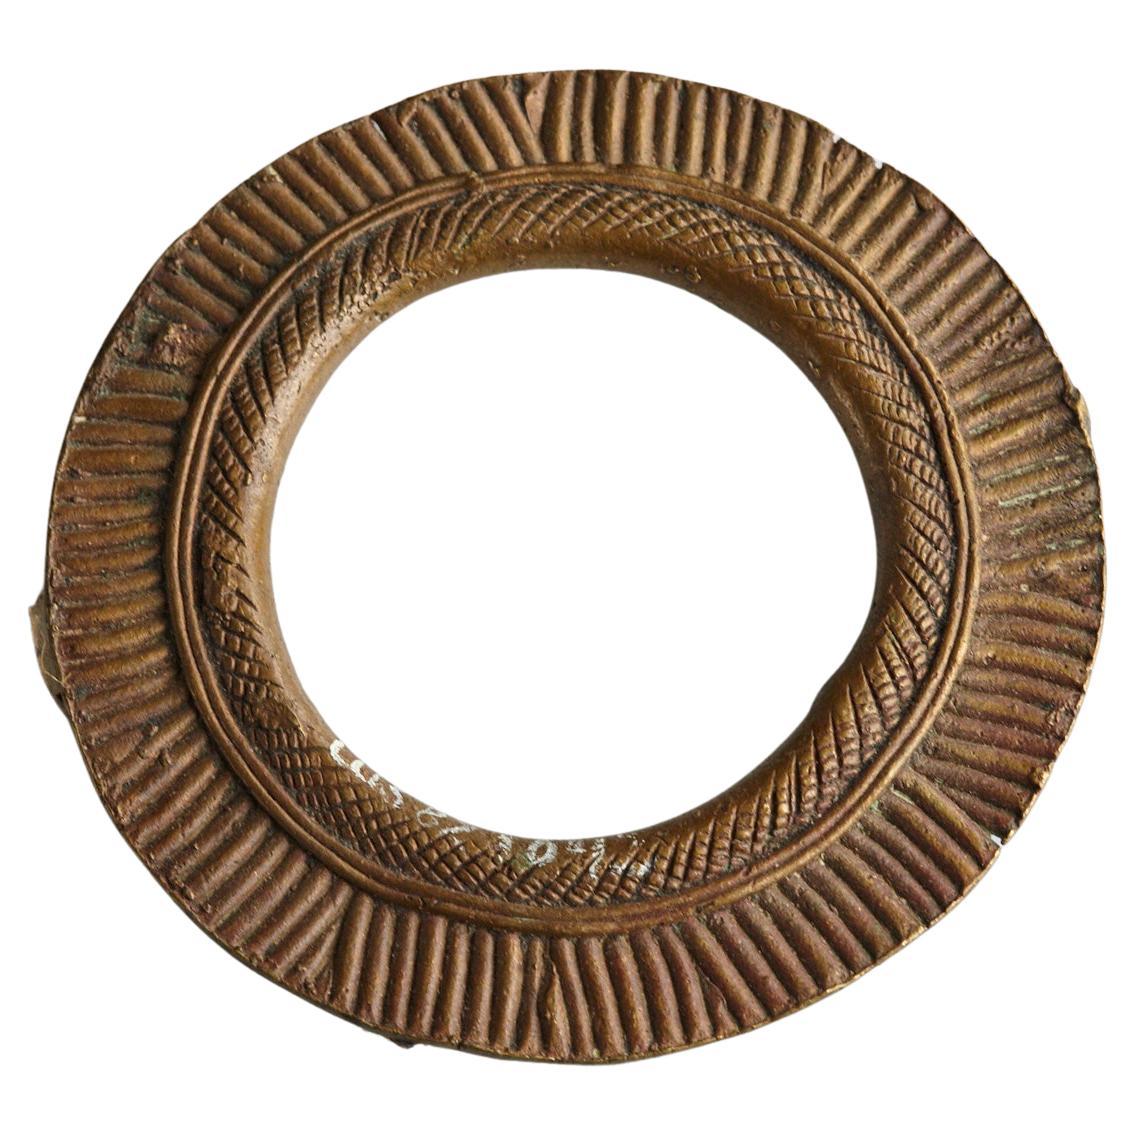 Bronze Currency Bracelet/Manilla, Beri People, Sudan, 19th Century - No 1 For Sale